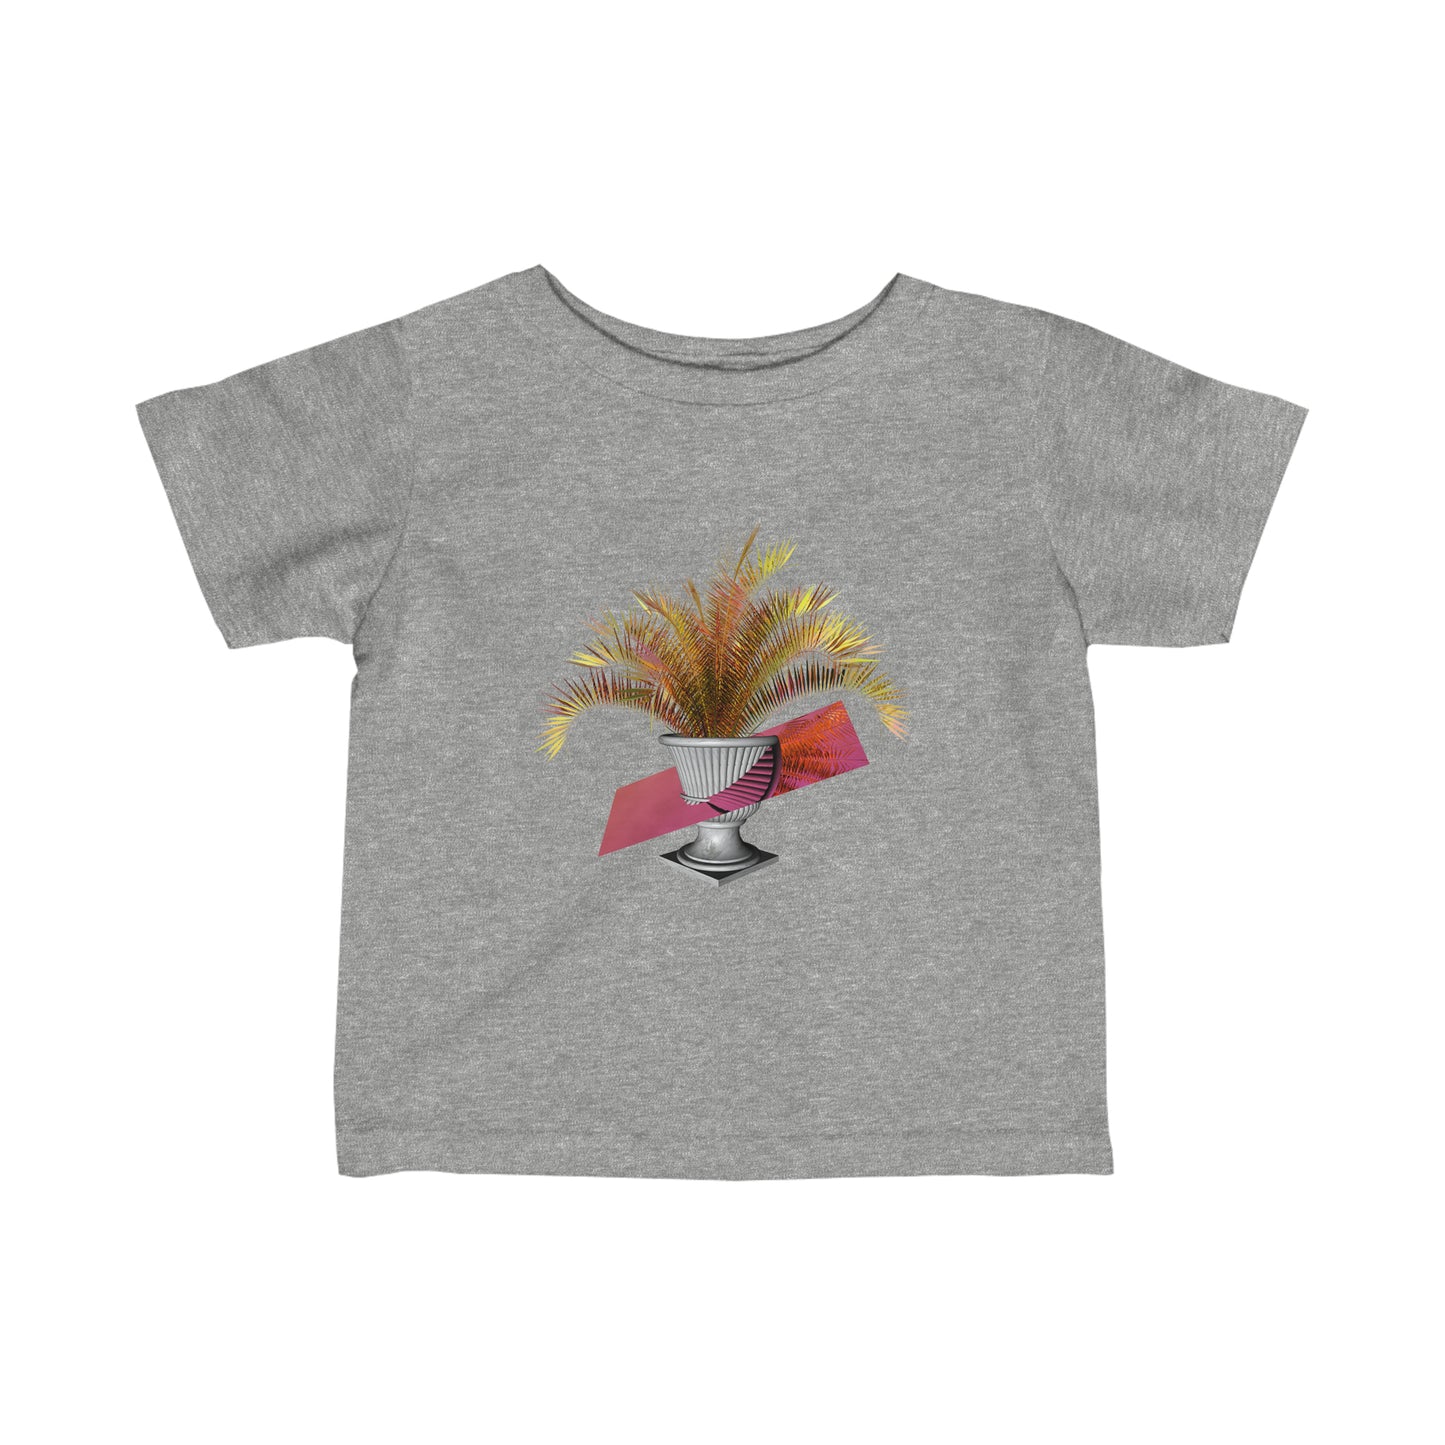 Glitchy Plant Infant T-Shirt